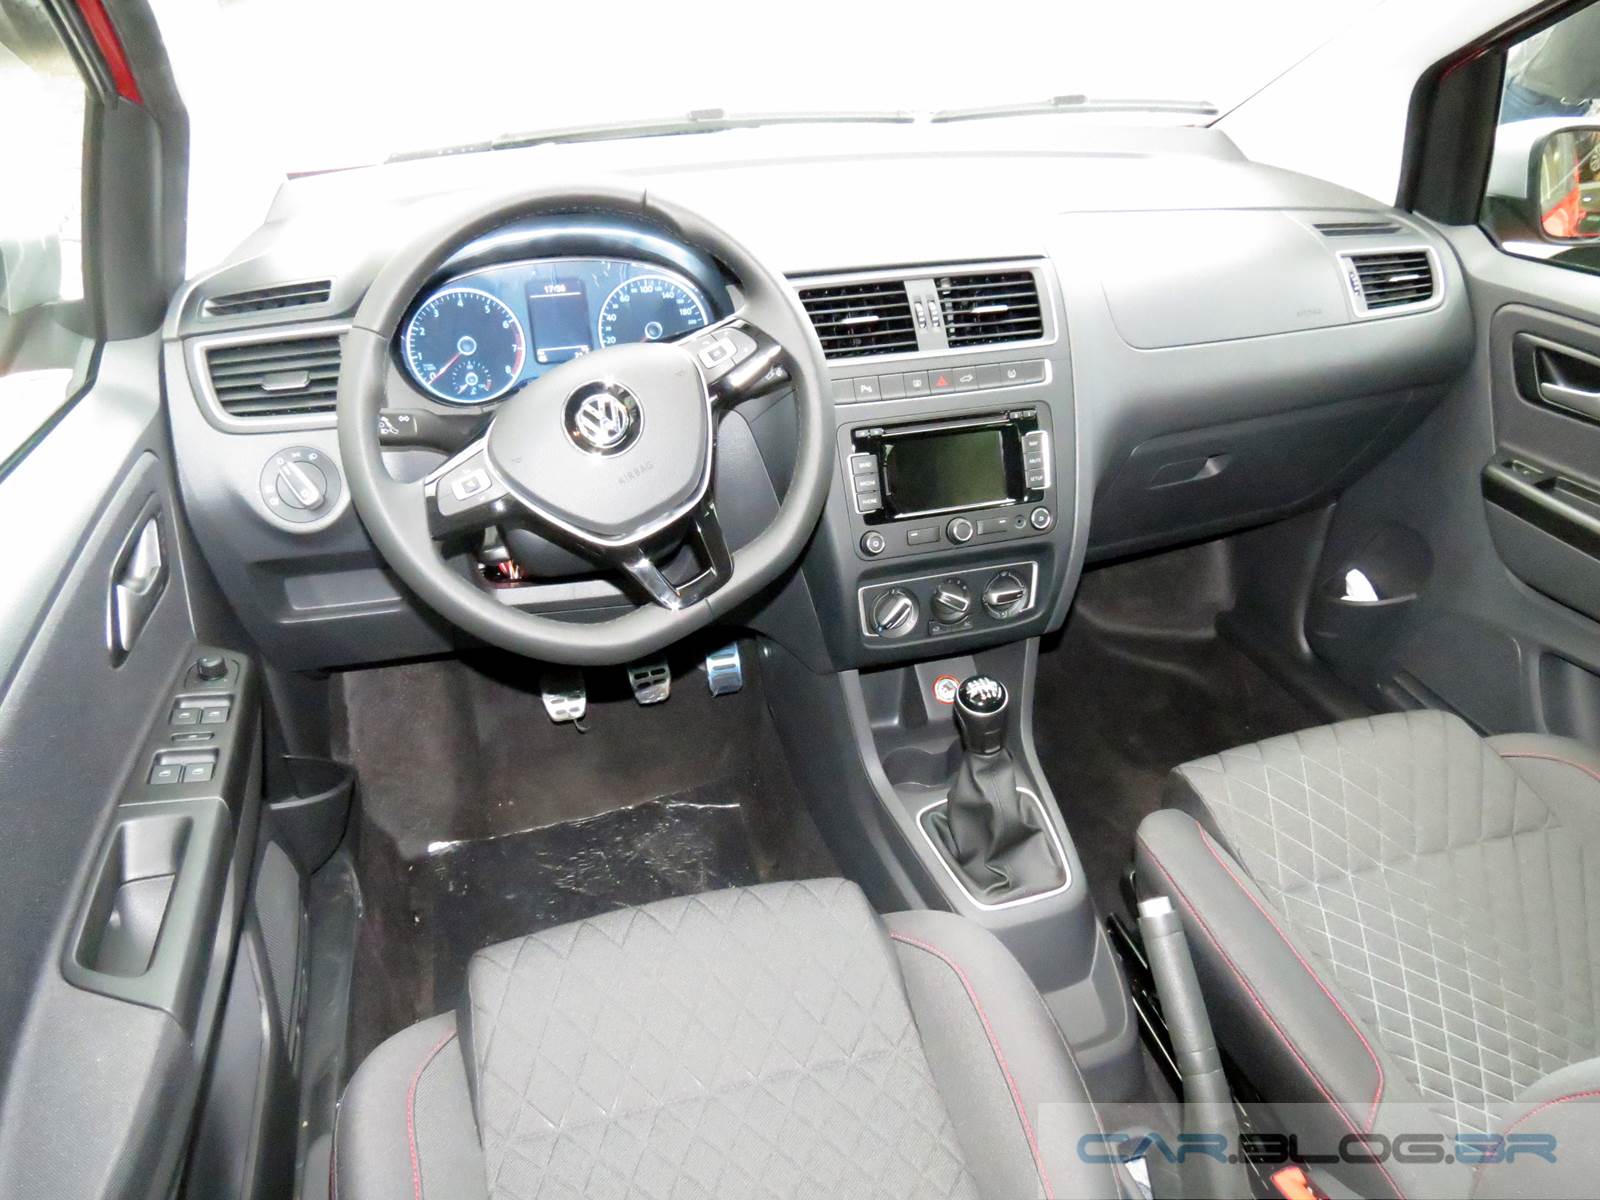 Novo VW CrossFox 2015 - interior